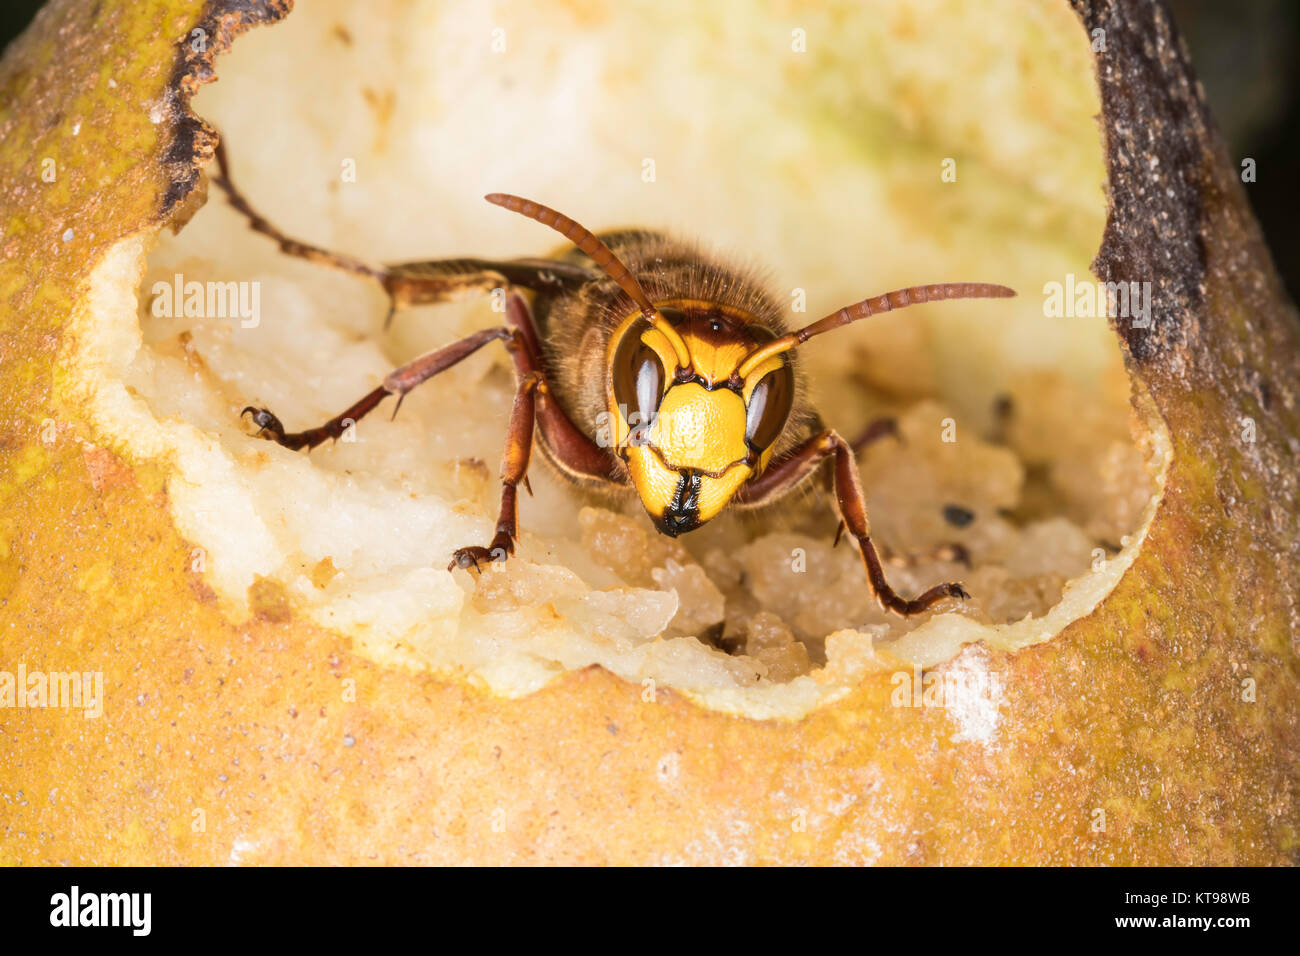 Hornet in a half eaten Pear in the autumn Stock Photo